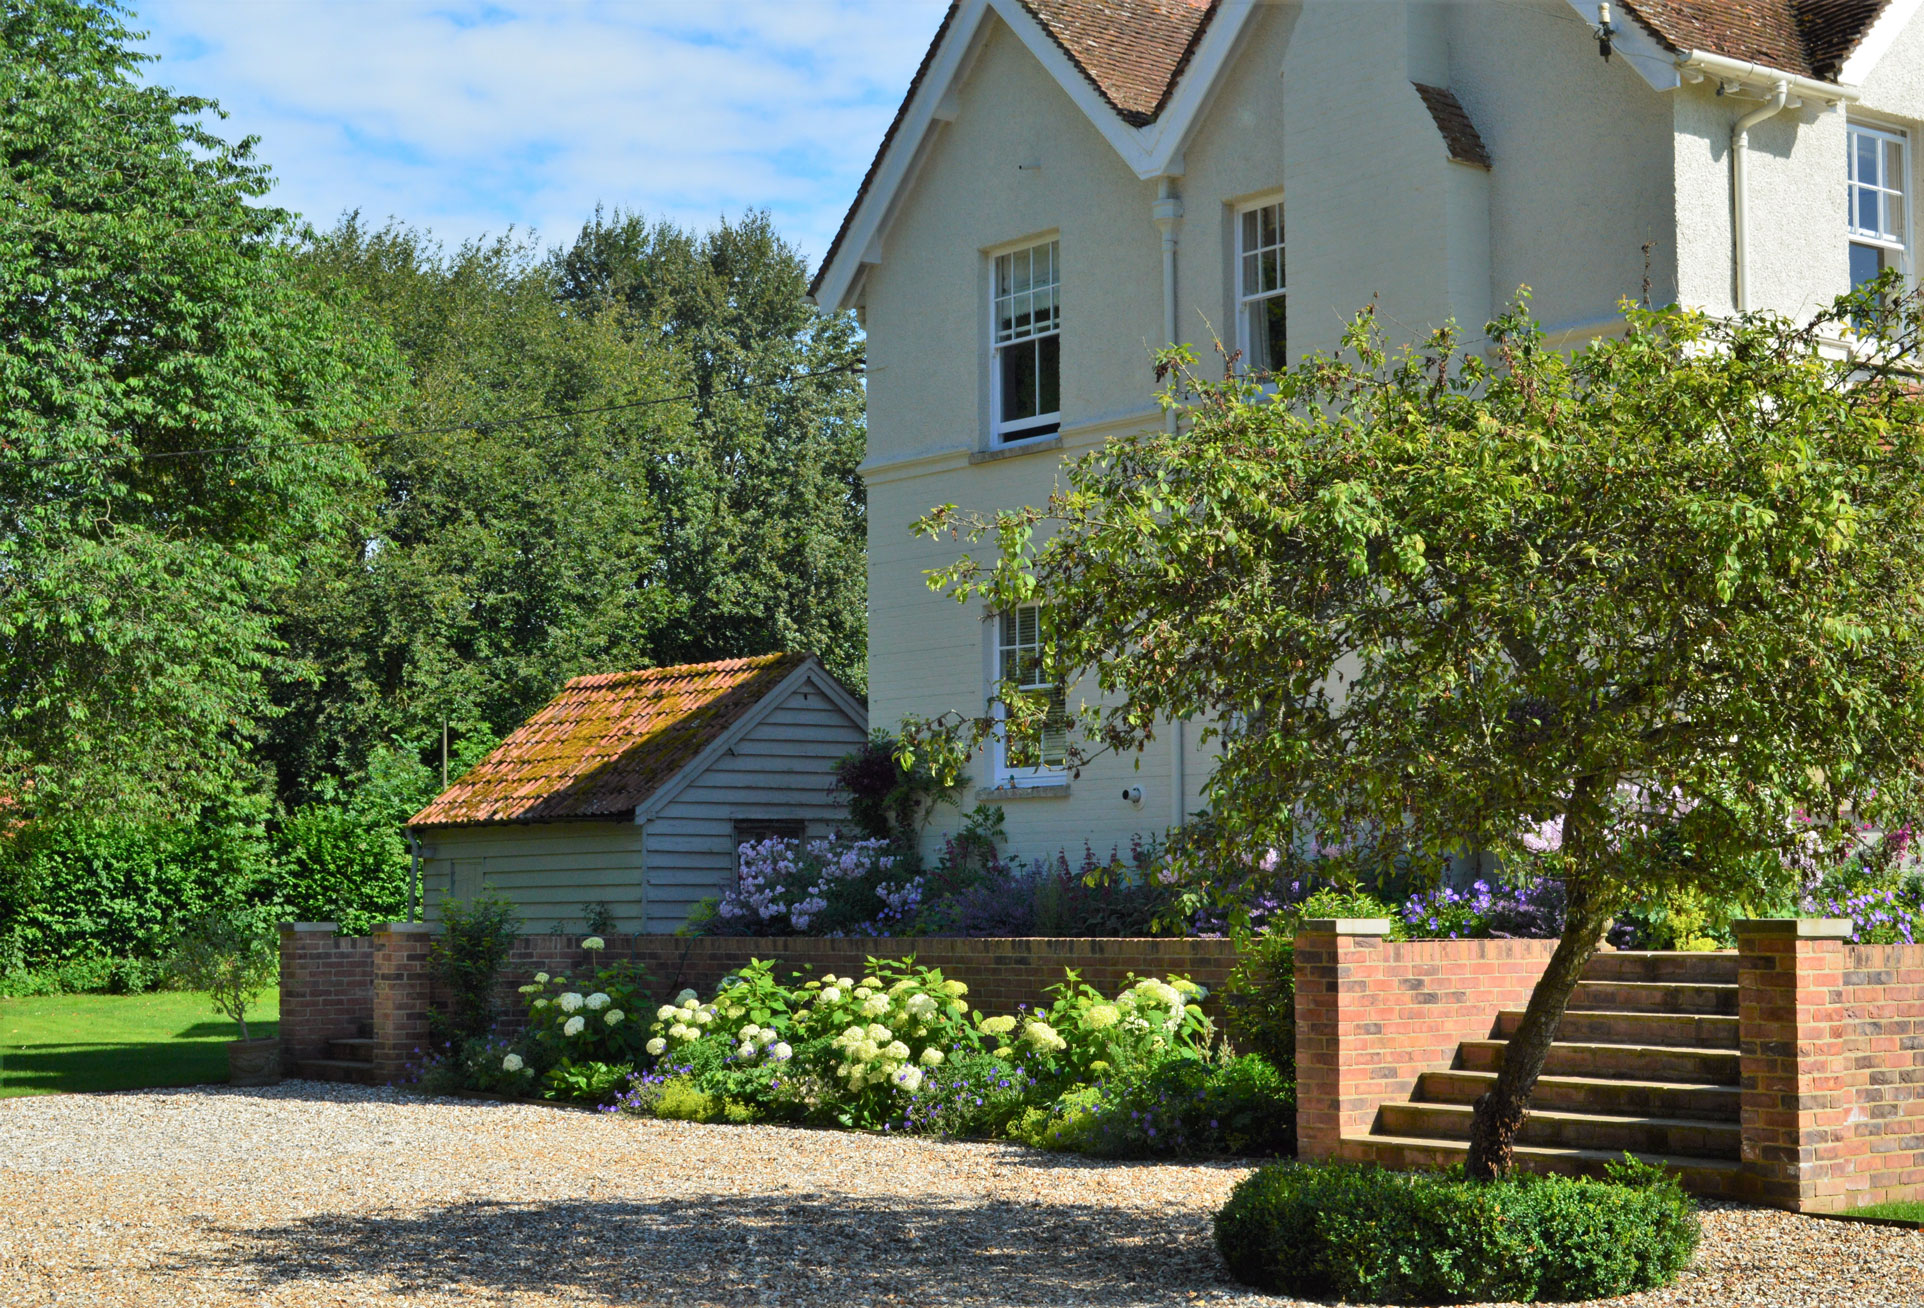 Country house garden design with Hydrangea 'Annabelle'